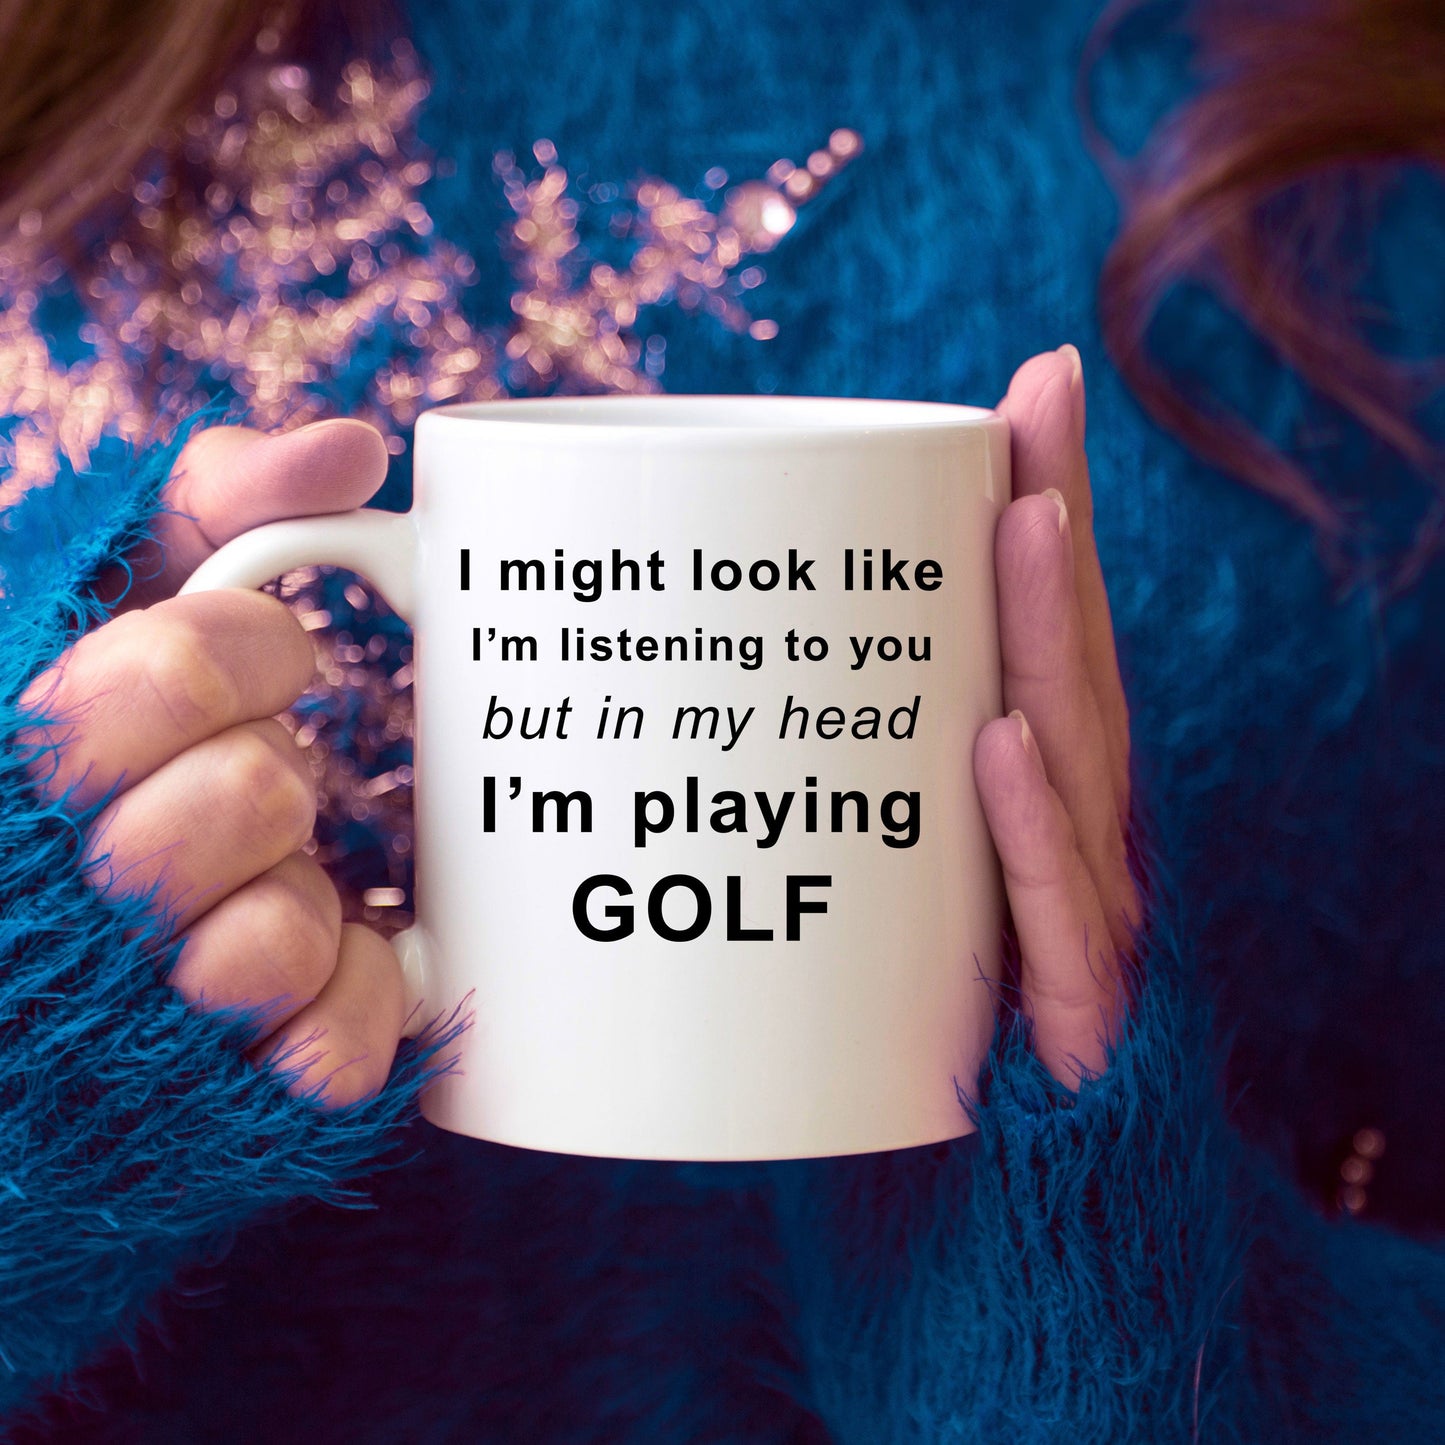 Golfer Funny Coffee Mug - I might look like I'm listening